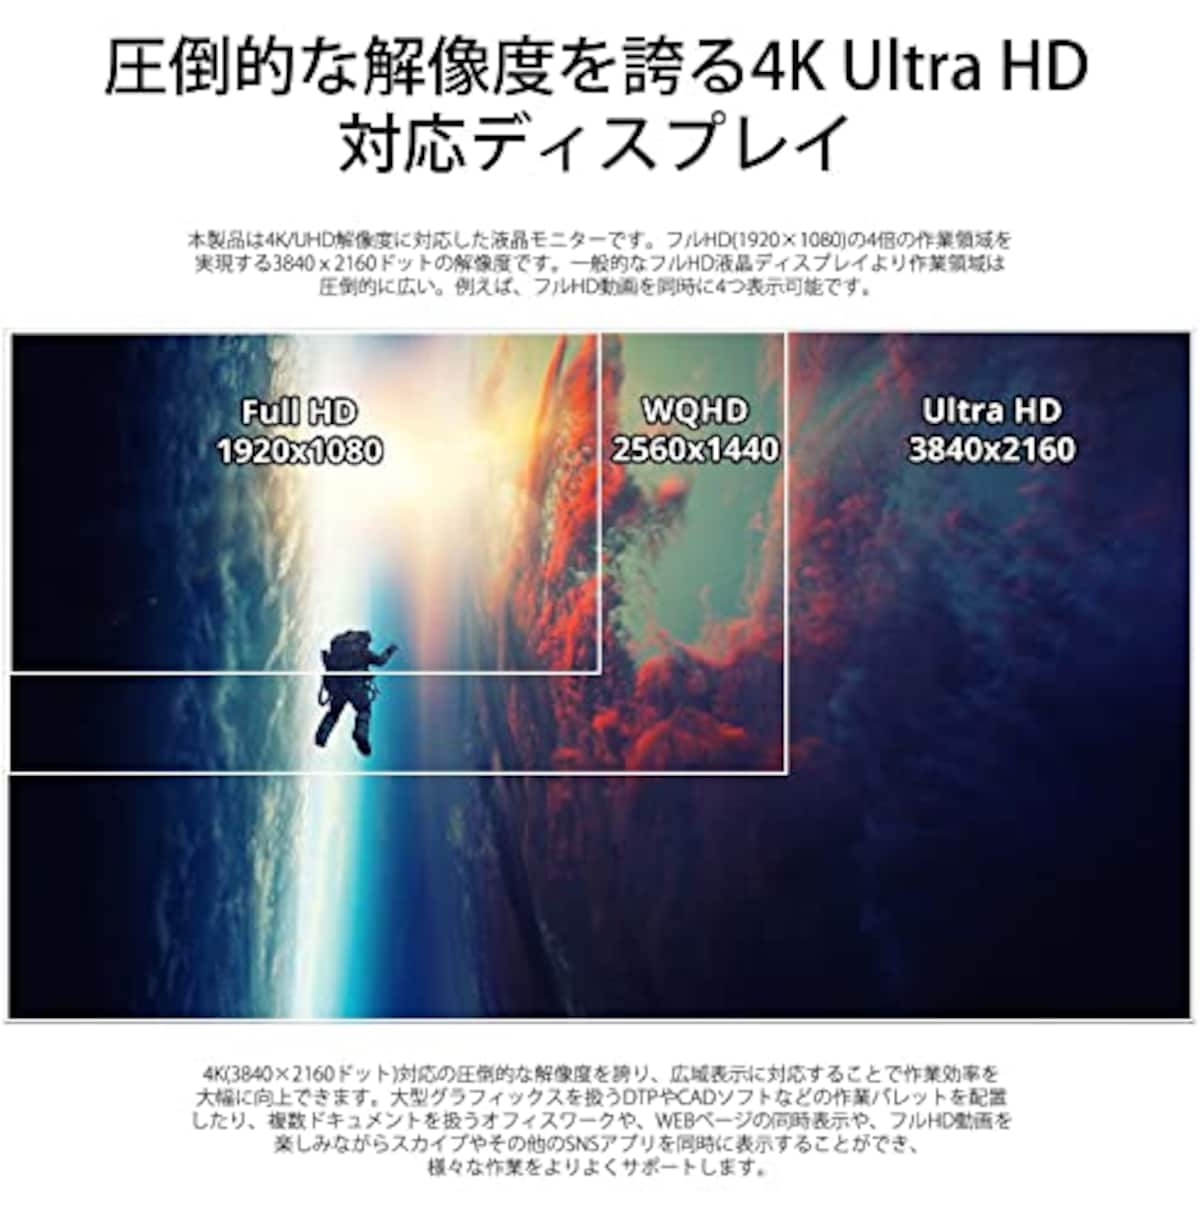  【Amazon.co.jp限定】JAPANNEXT 28インチゲーミングモニター JN-280IPS144UHDR HDMI2.1対応 4K(3840 x 2160) 144Hz 液晶モニター HDMI DP画像2 